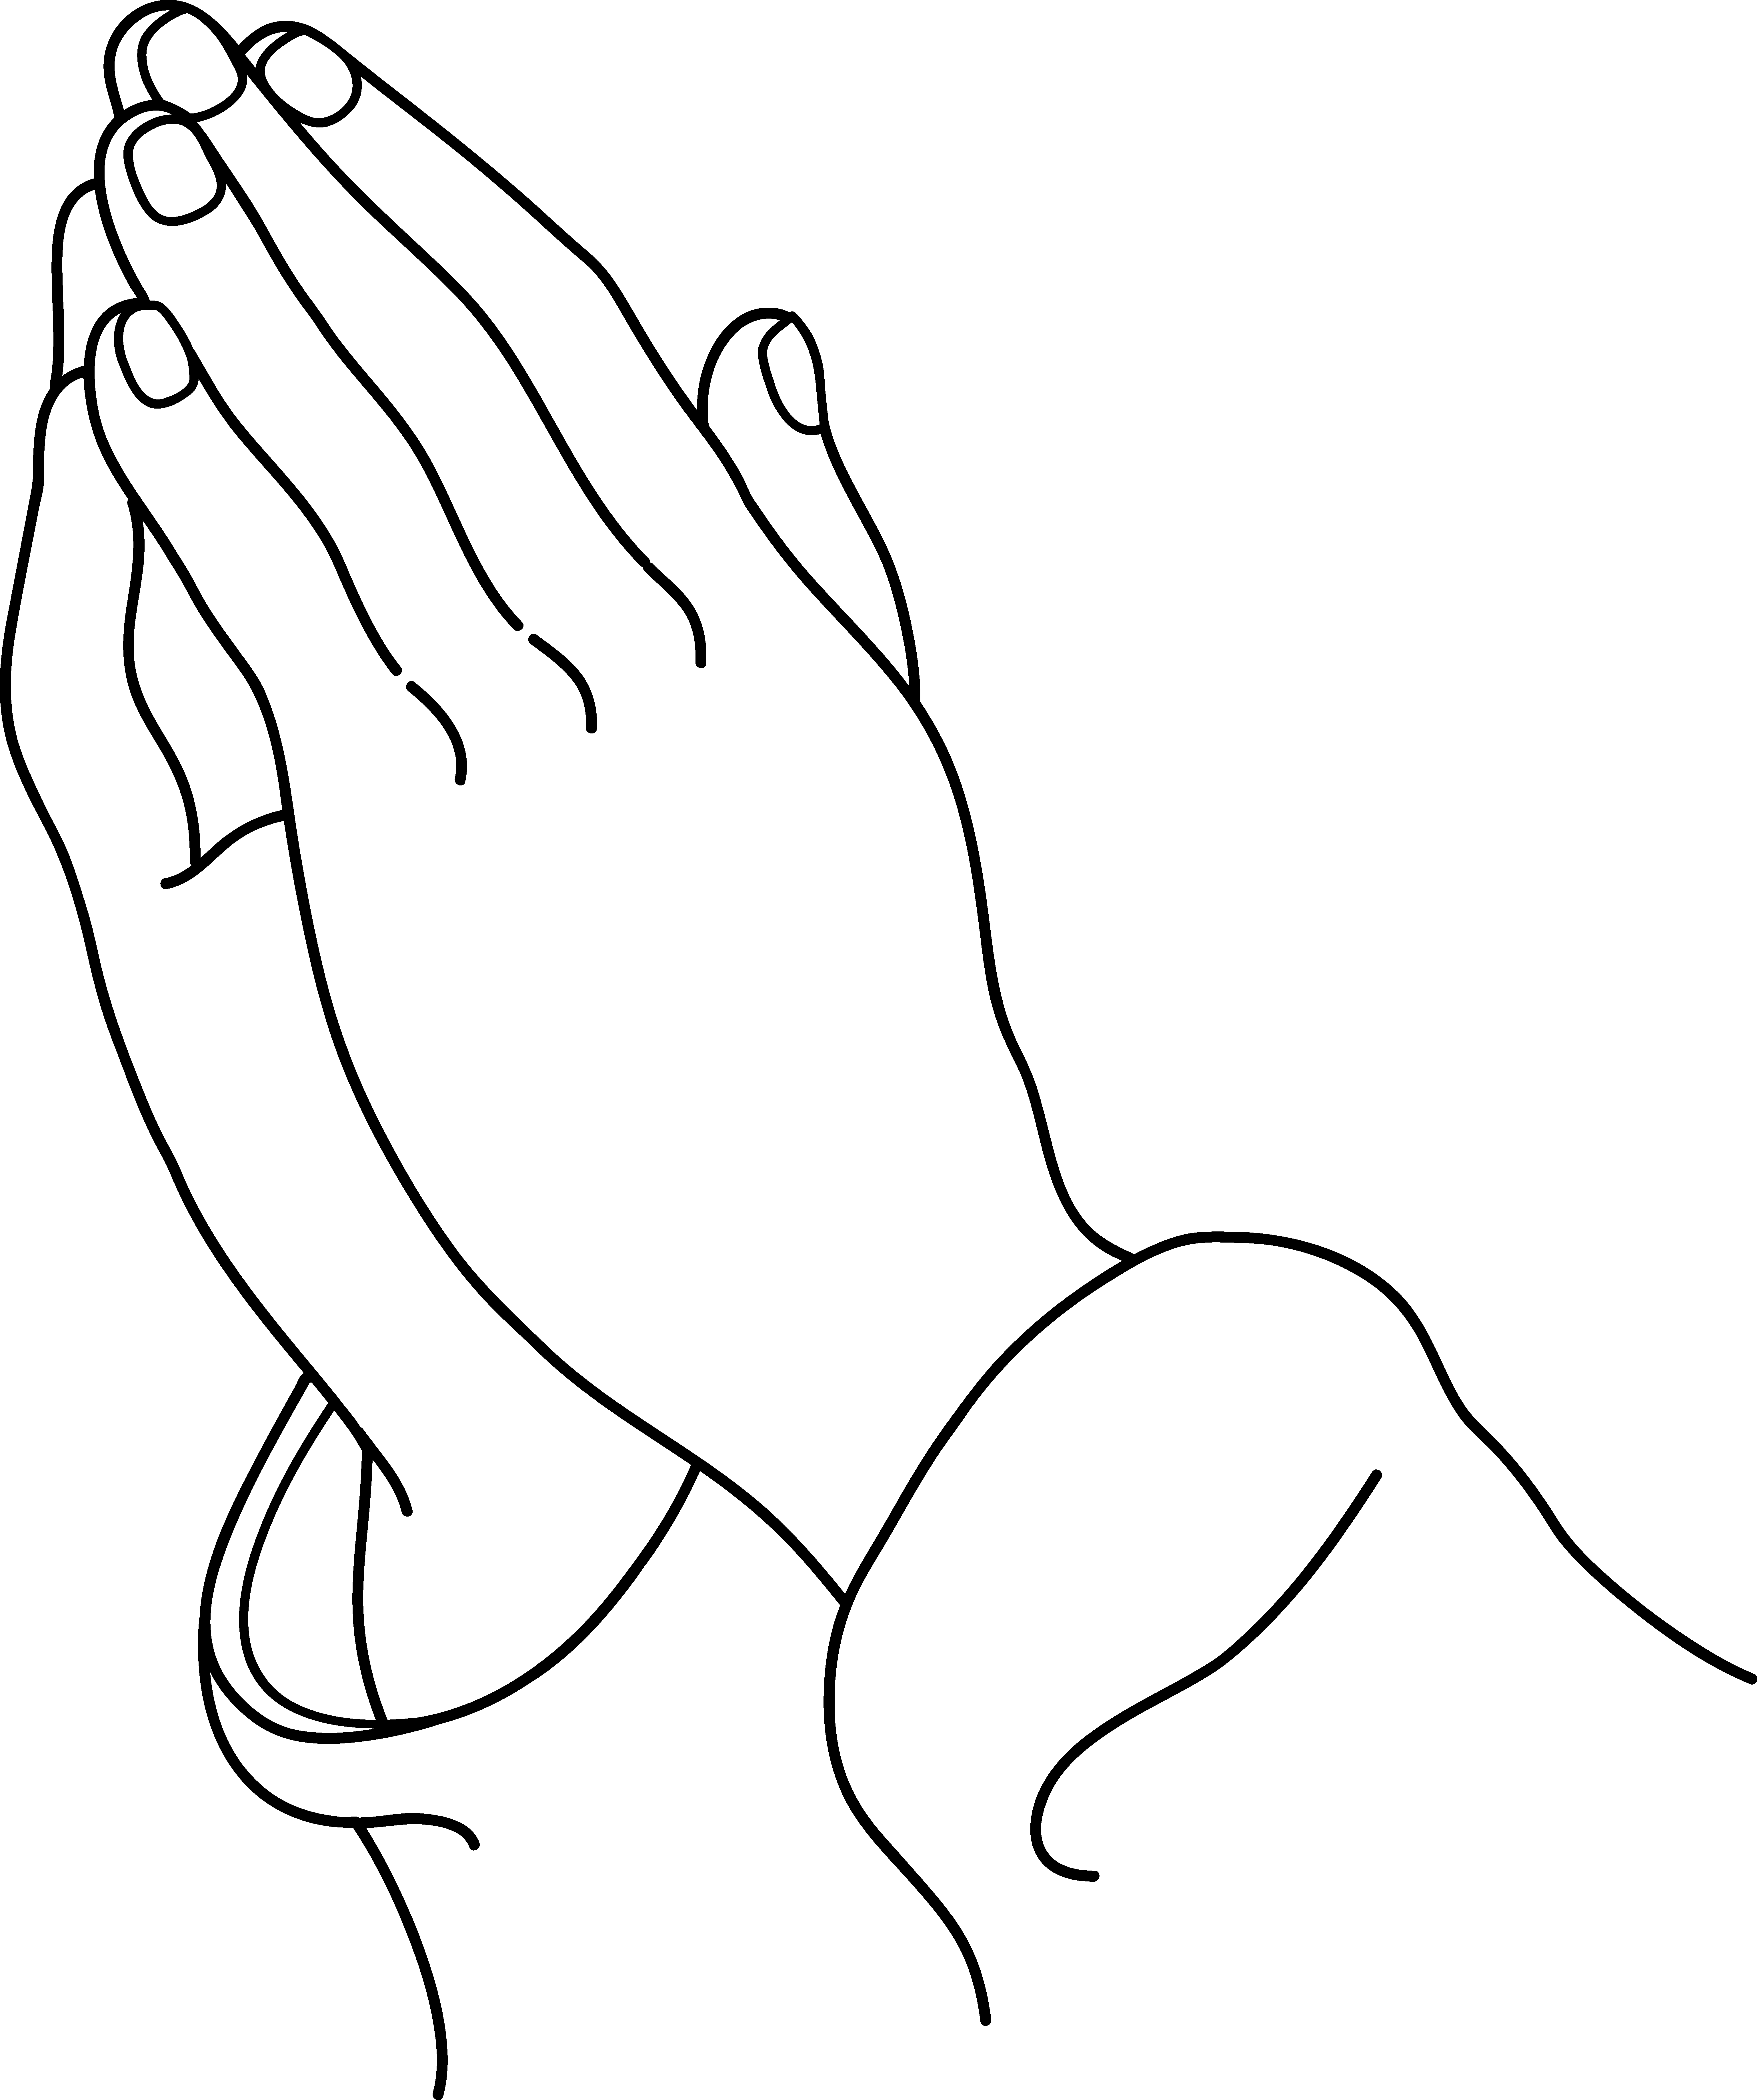 Praying hands praying hand child prayer hands clip art image 6 